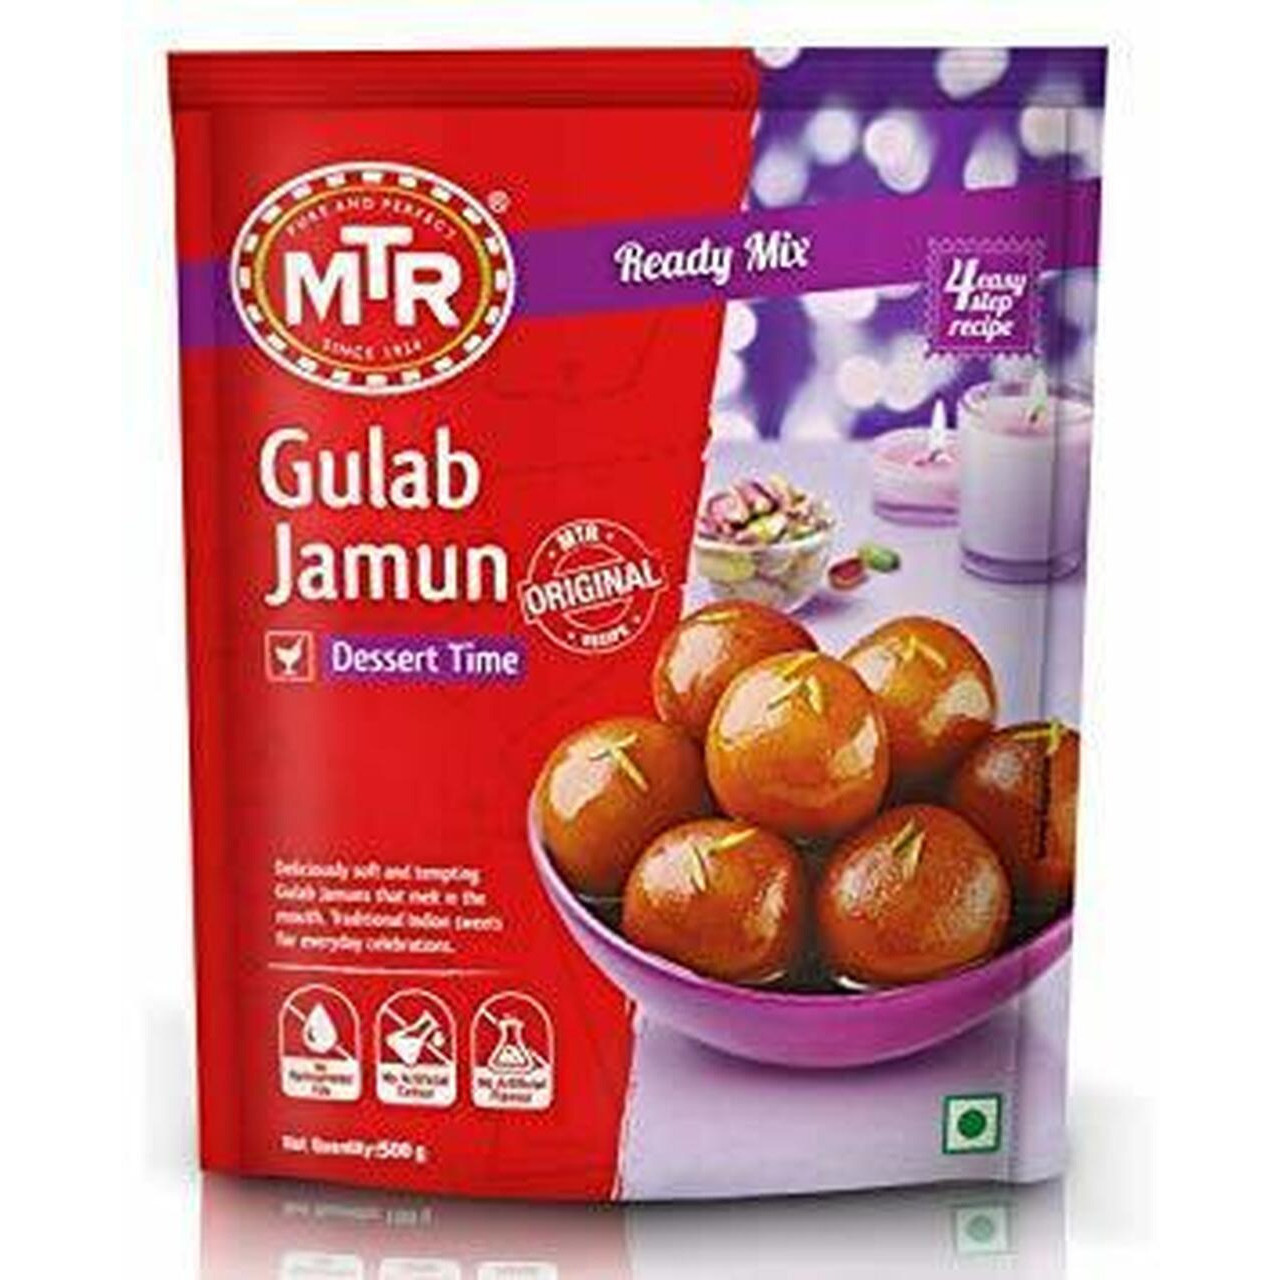 Pack of 5 - Mtr Sweet Mix Gulab Jamun -  500 Gm (17 Oz)